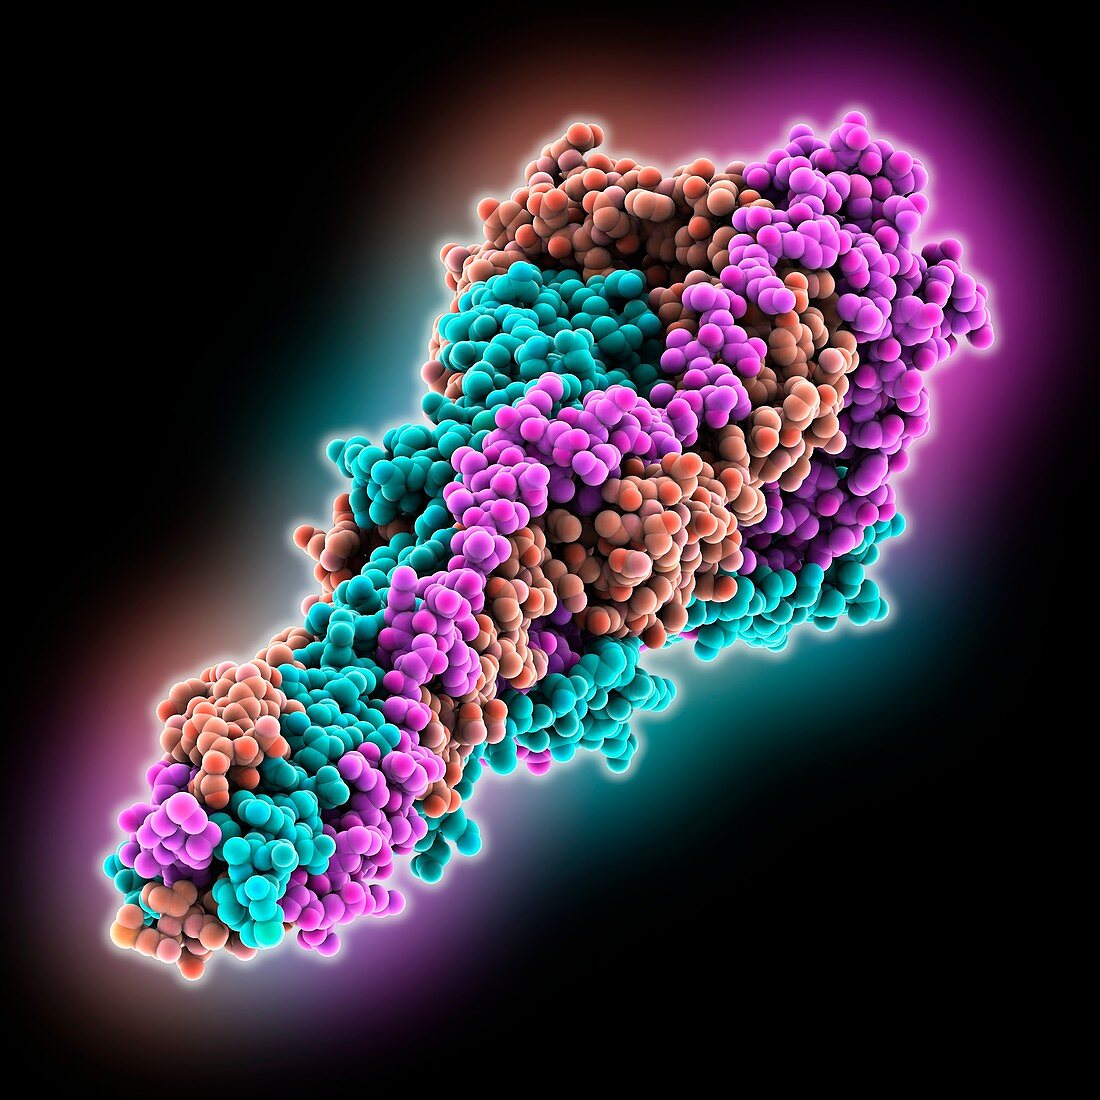 Coronavirus spike glycoprotein, molecular model